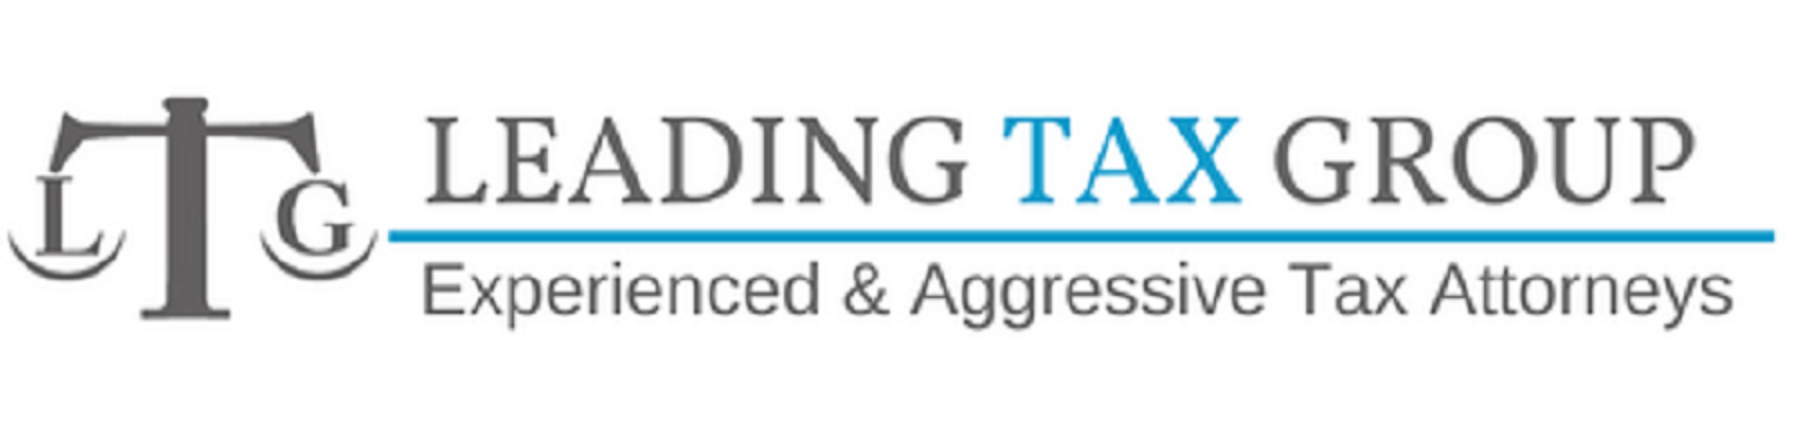 Leading Tax Group's Logo